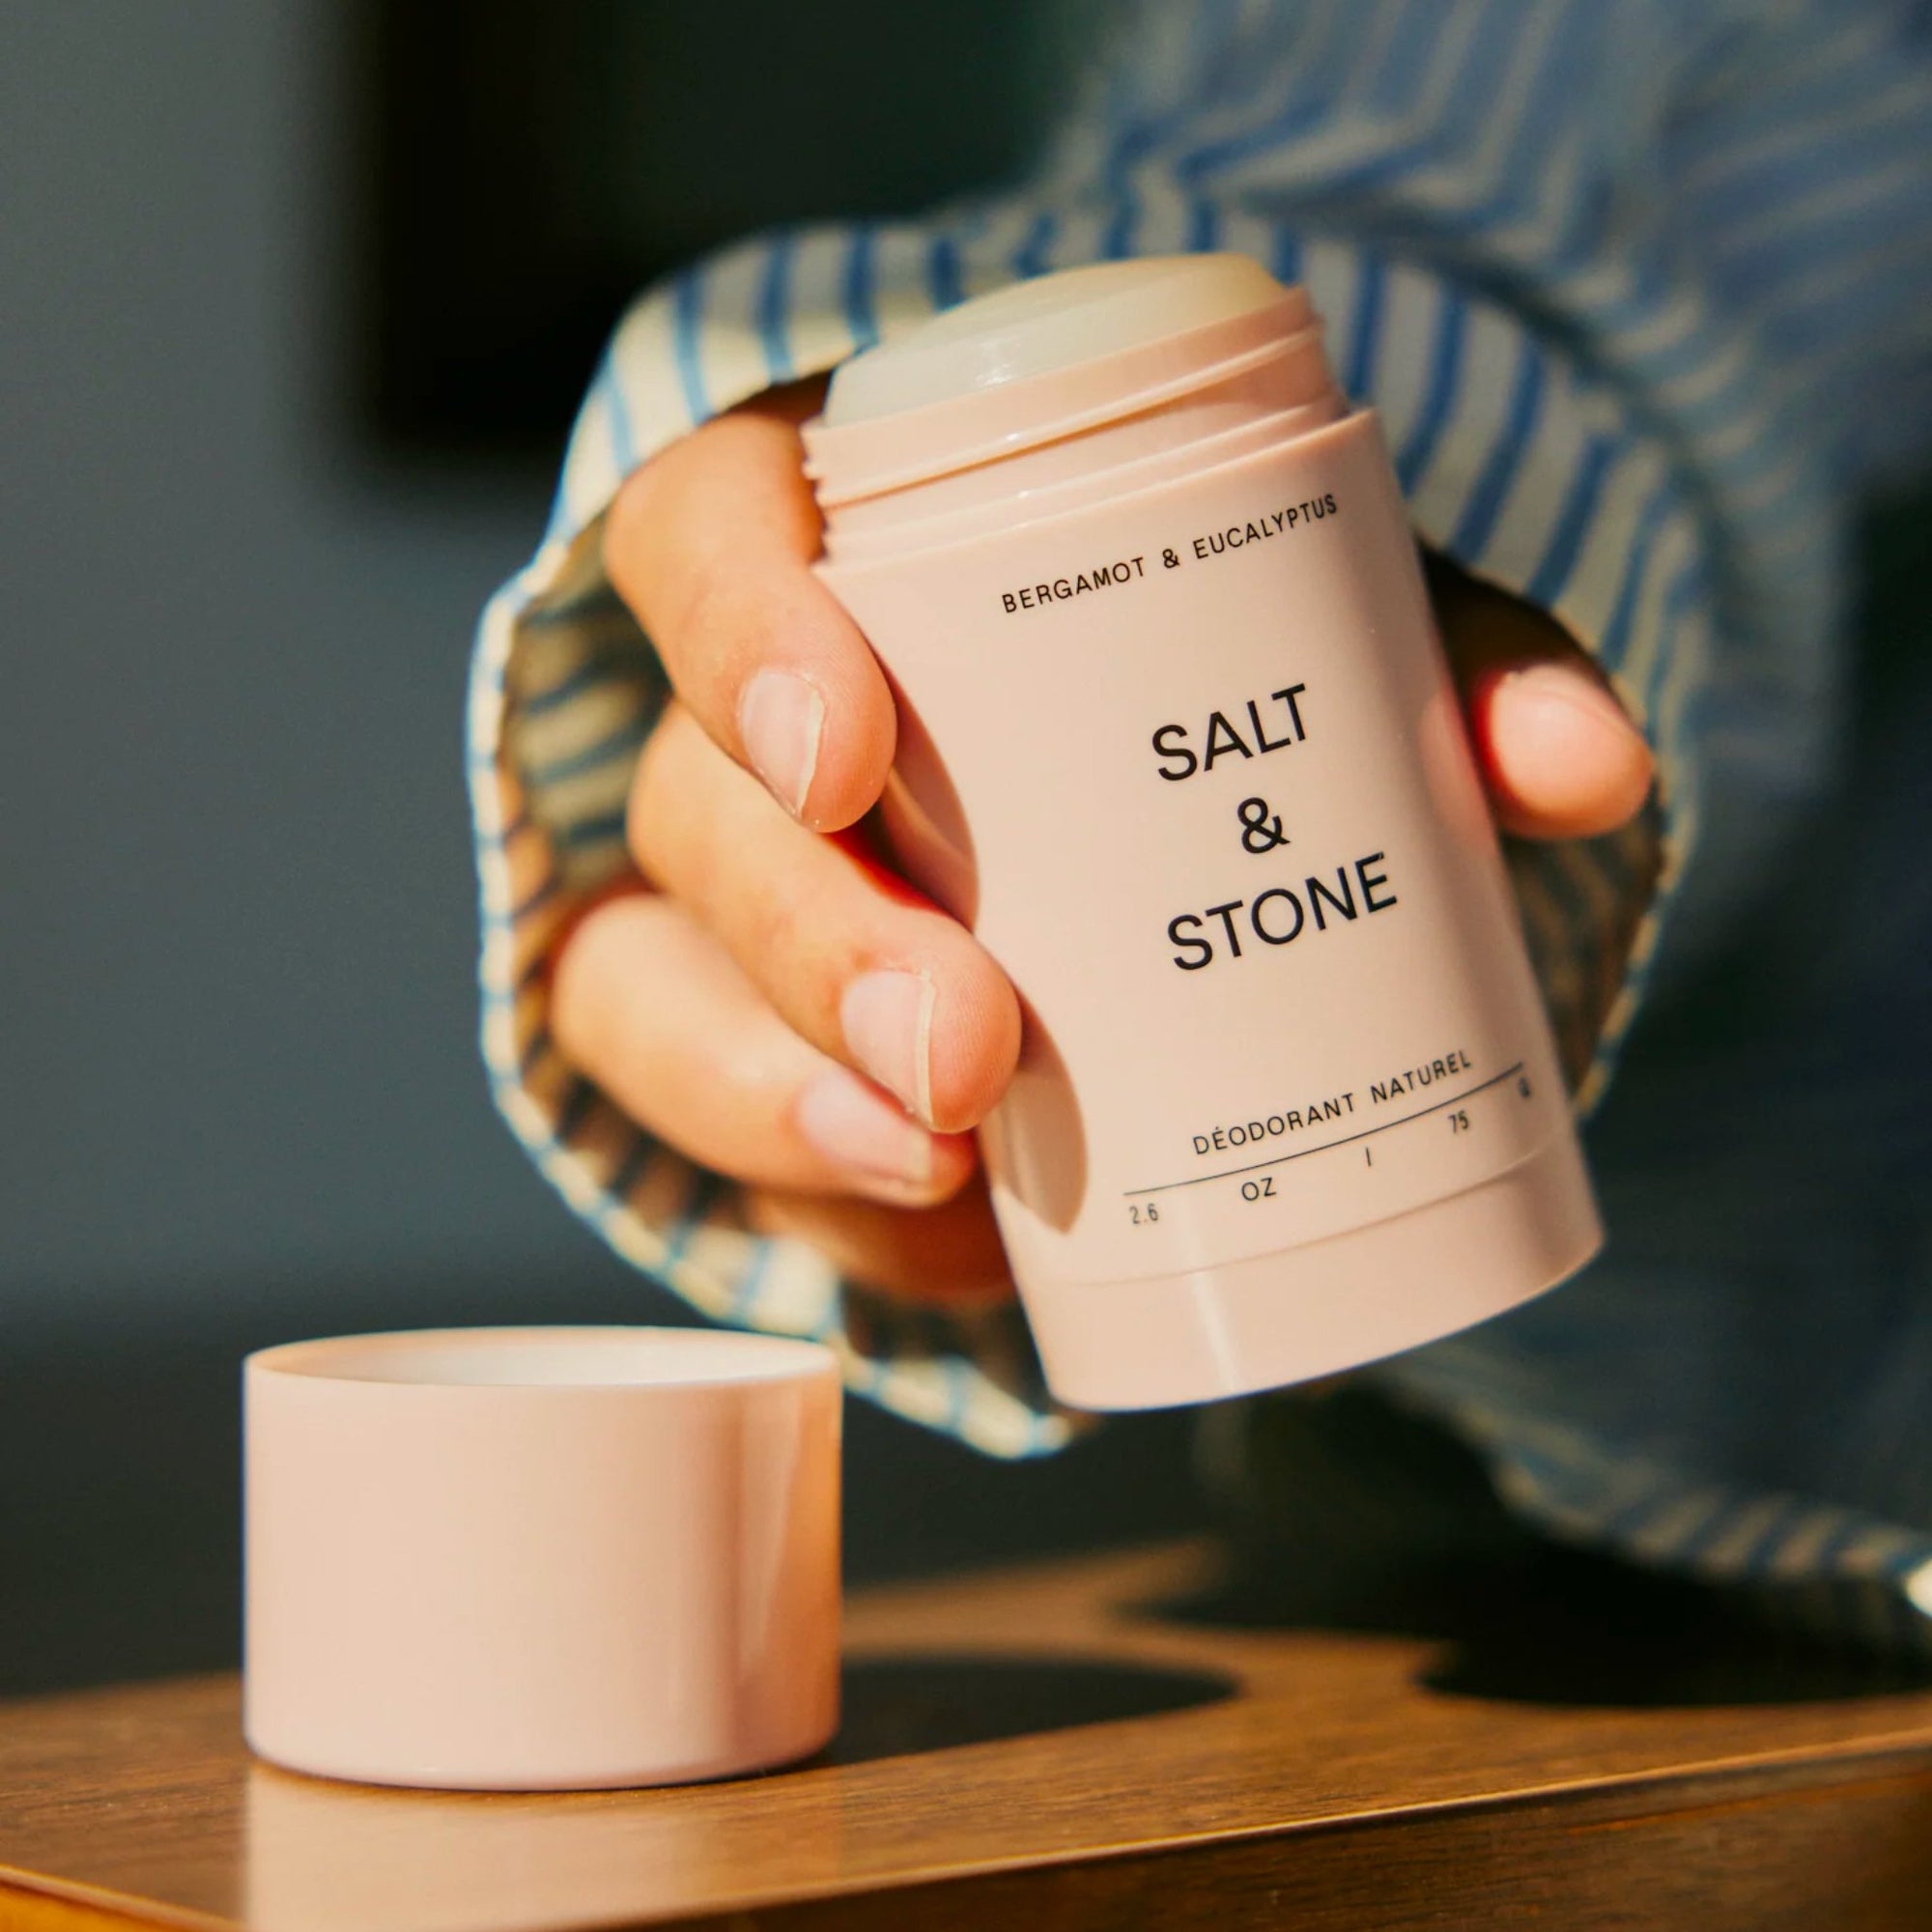 Salt & Stone - Salt & Stone Natural Deodorant Gel (Sensitive) - ORESTA clean beauty simplified